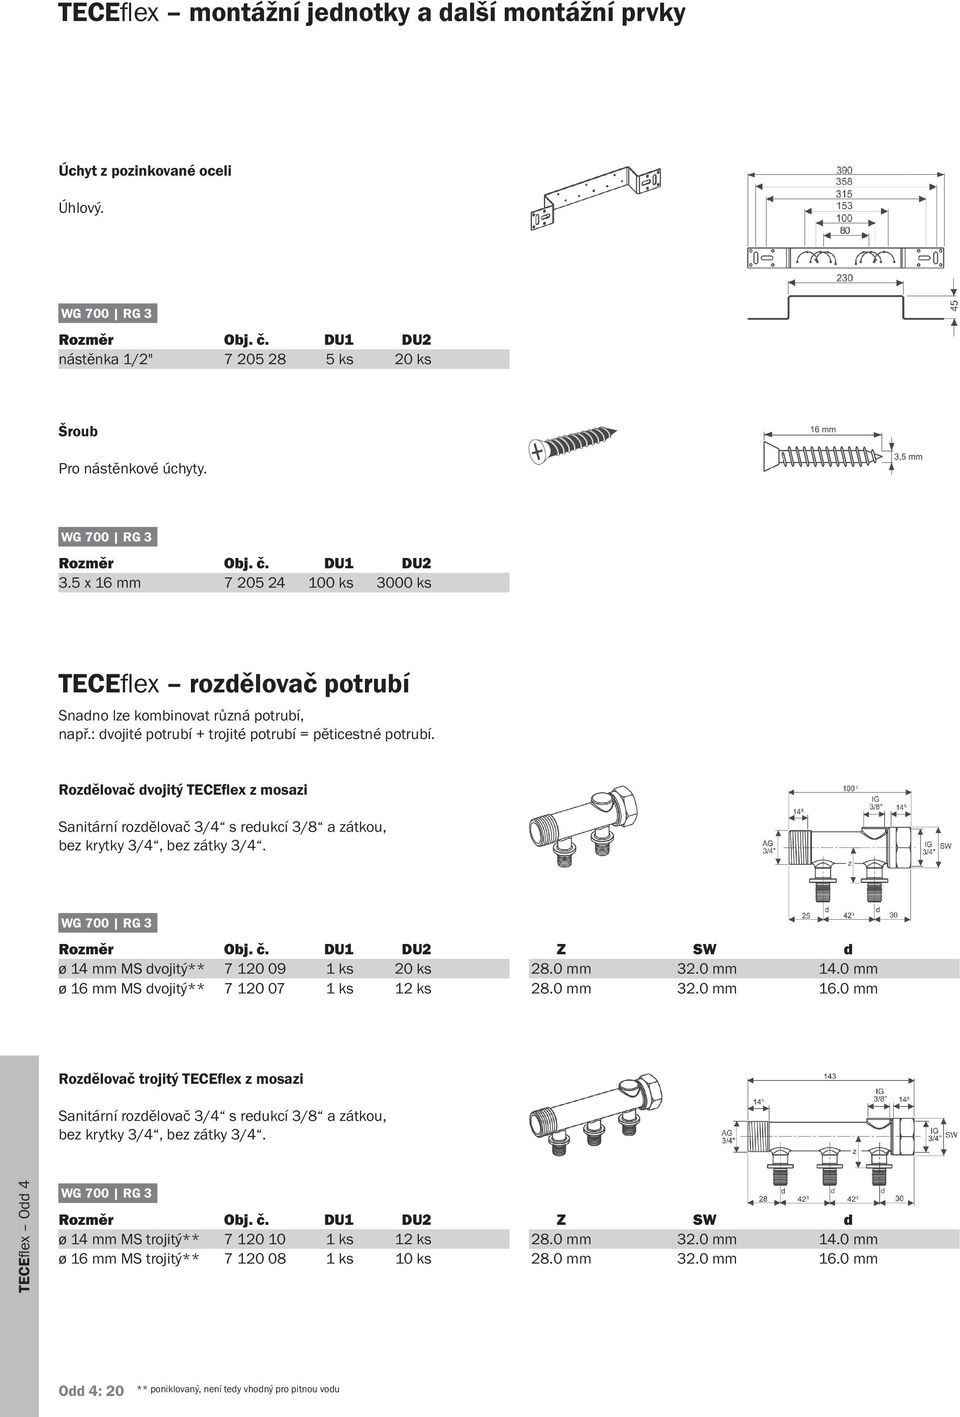 Rozdělovač dvojitý TECEflex z mosazi Sanitární rozdělovač 3/4 s redukcí 3/8 a zátkou, bez krytky 3/4, bez zátky 3/4. Z SW d ø 14 mm MS dvojitý** 7 120 09 1 ks 20 ks 28.0 mm 32.0 mm 14.